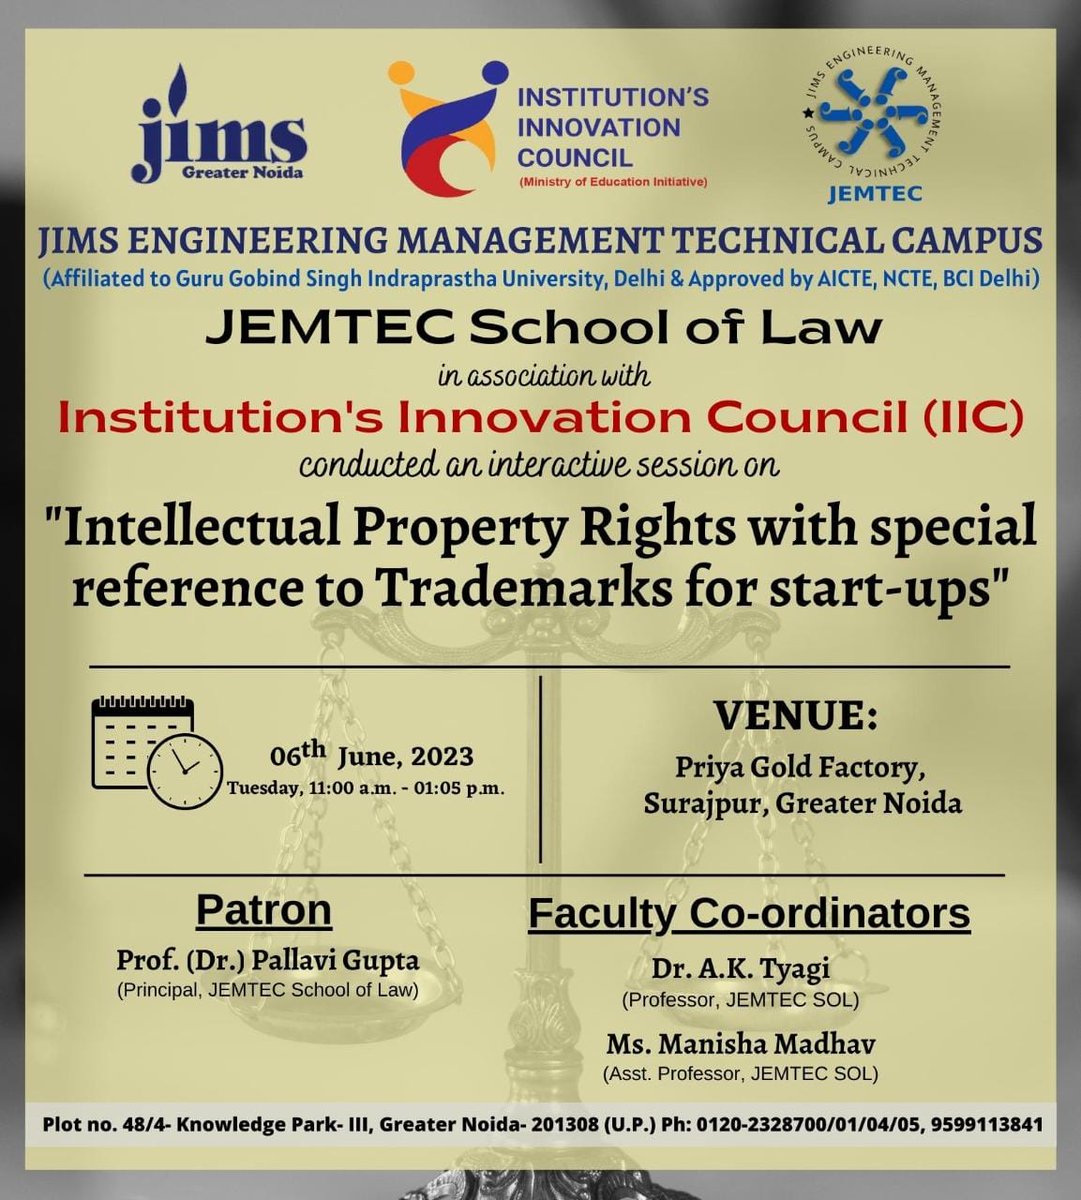 JEMTEC School of Law in association with IIC .
#jimsgreaternoida #ggsipu #lawcollege #iic
𝐉𝐈𝐌𝐒  𝐆𝐫𝐞𝐚𝐭𝐞𝐫 𝐍𝐨𝐢𝐝𝐚
𝐏𝐡𝐨𝐧𝐞 : 𝟎𝟏𝟐𝟎-𝟐𝟑𝟐𝟖𝟔𝟕𝟎/𝟐𝟑𝟐𝟖𝟕𝟎𝟎/𝟎𝟏